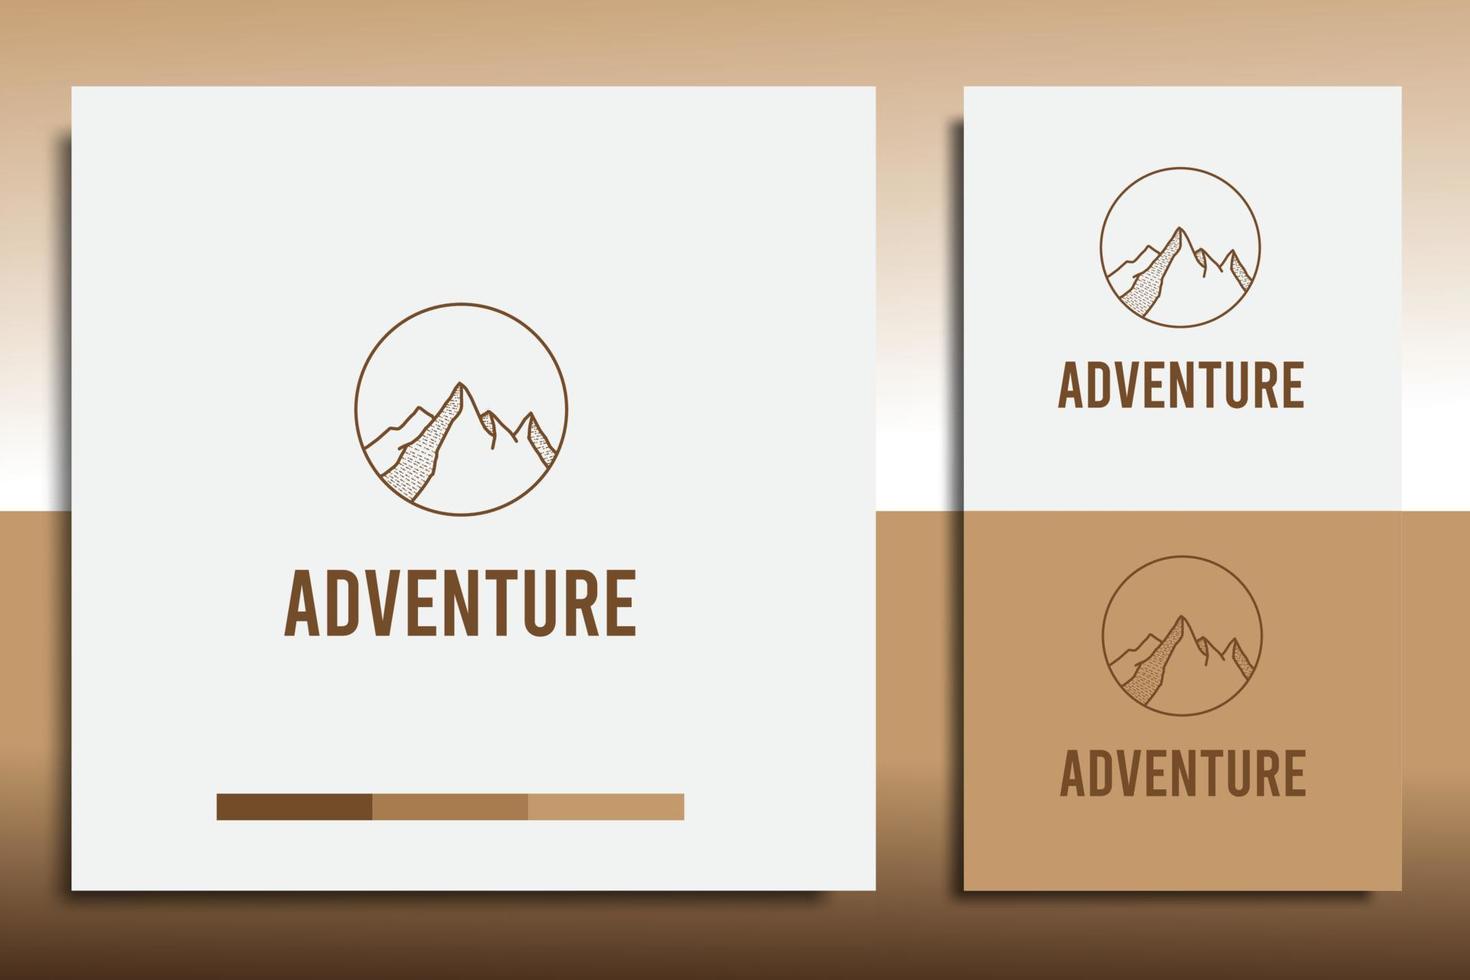 adventure logo design template, with a simple mountain icon vector